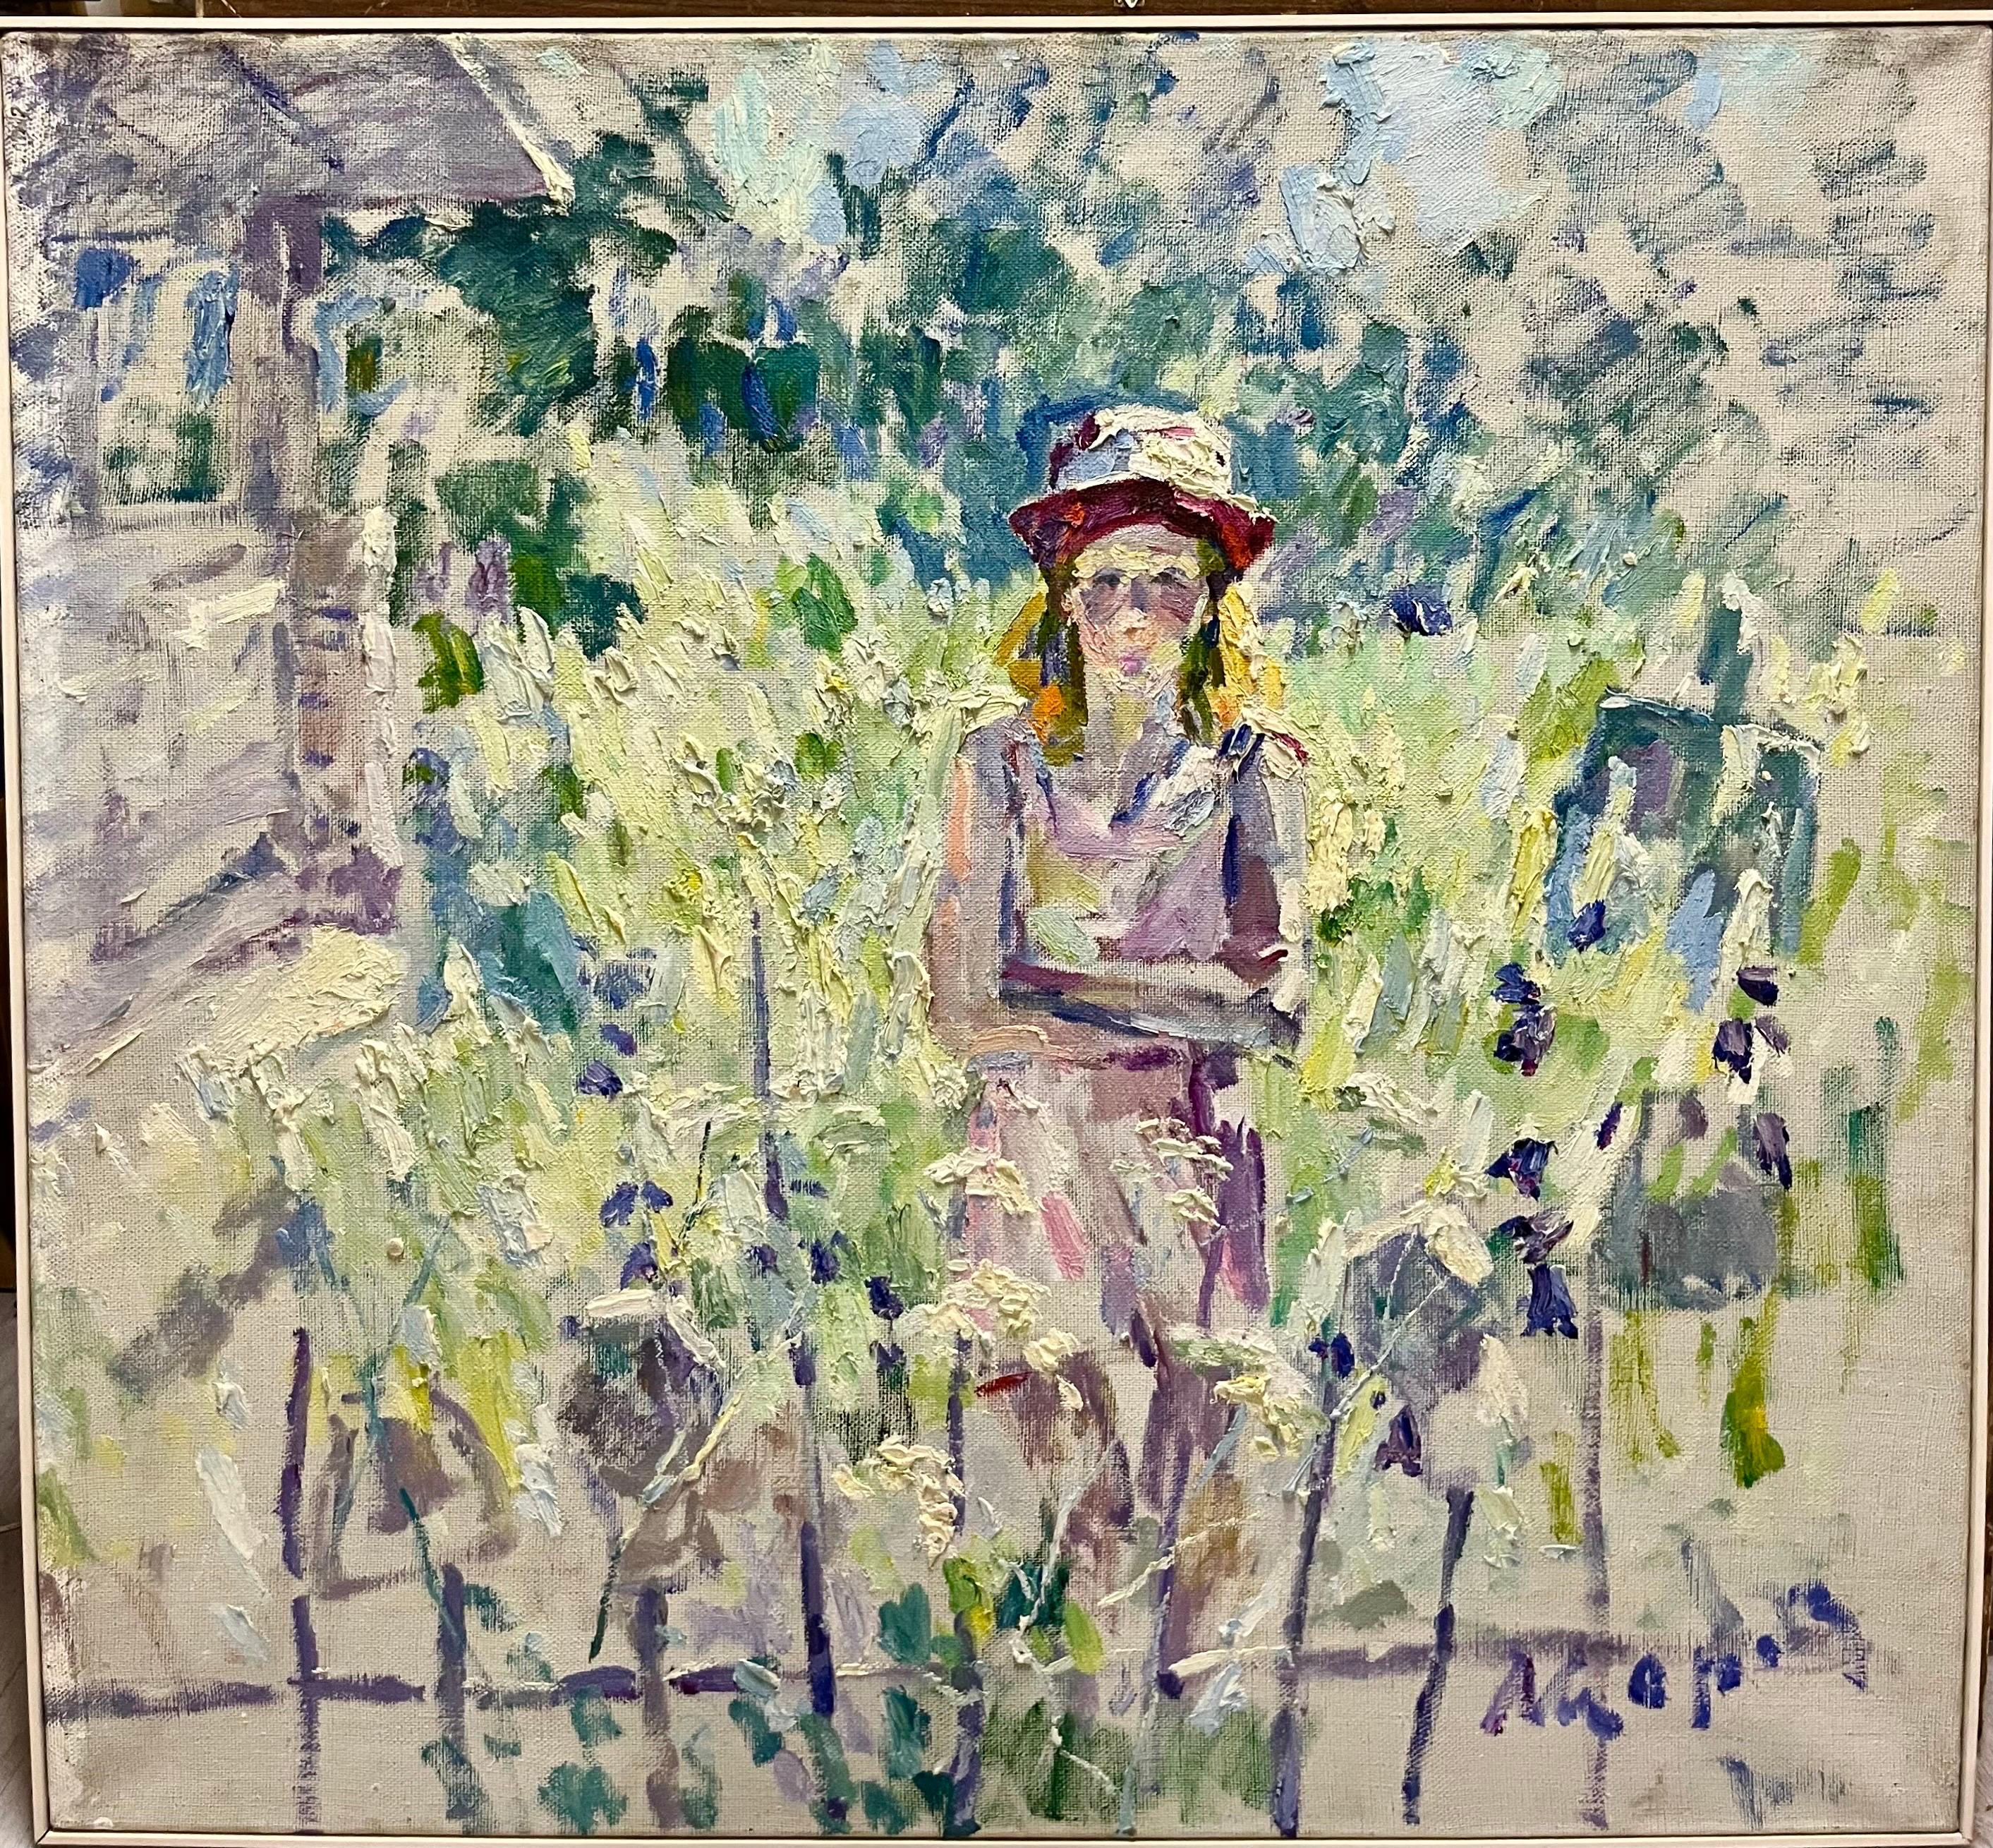 Figurative Painting Georgij Moroz - Jeune fille avec une cape rose  100 cm x 93 cm  2001